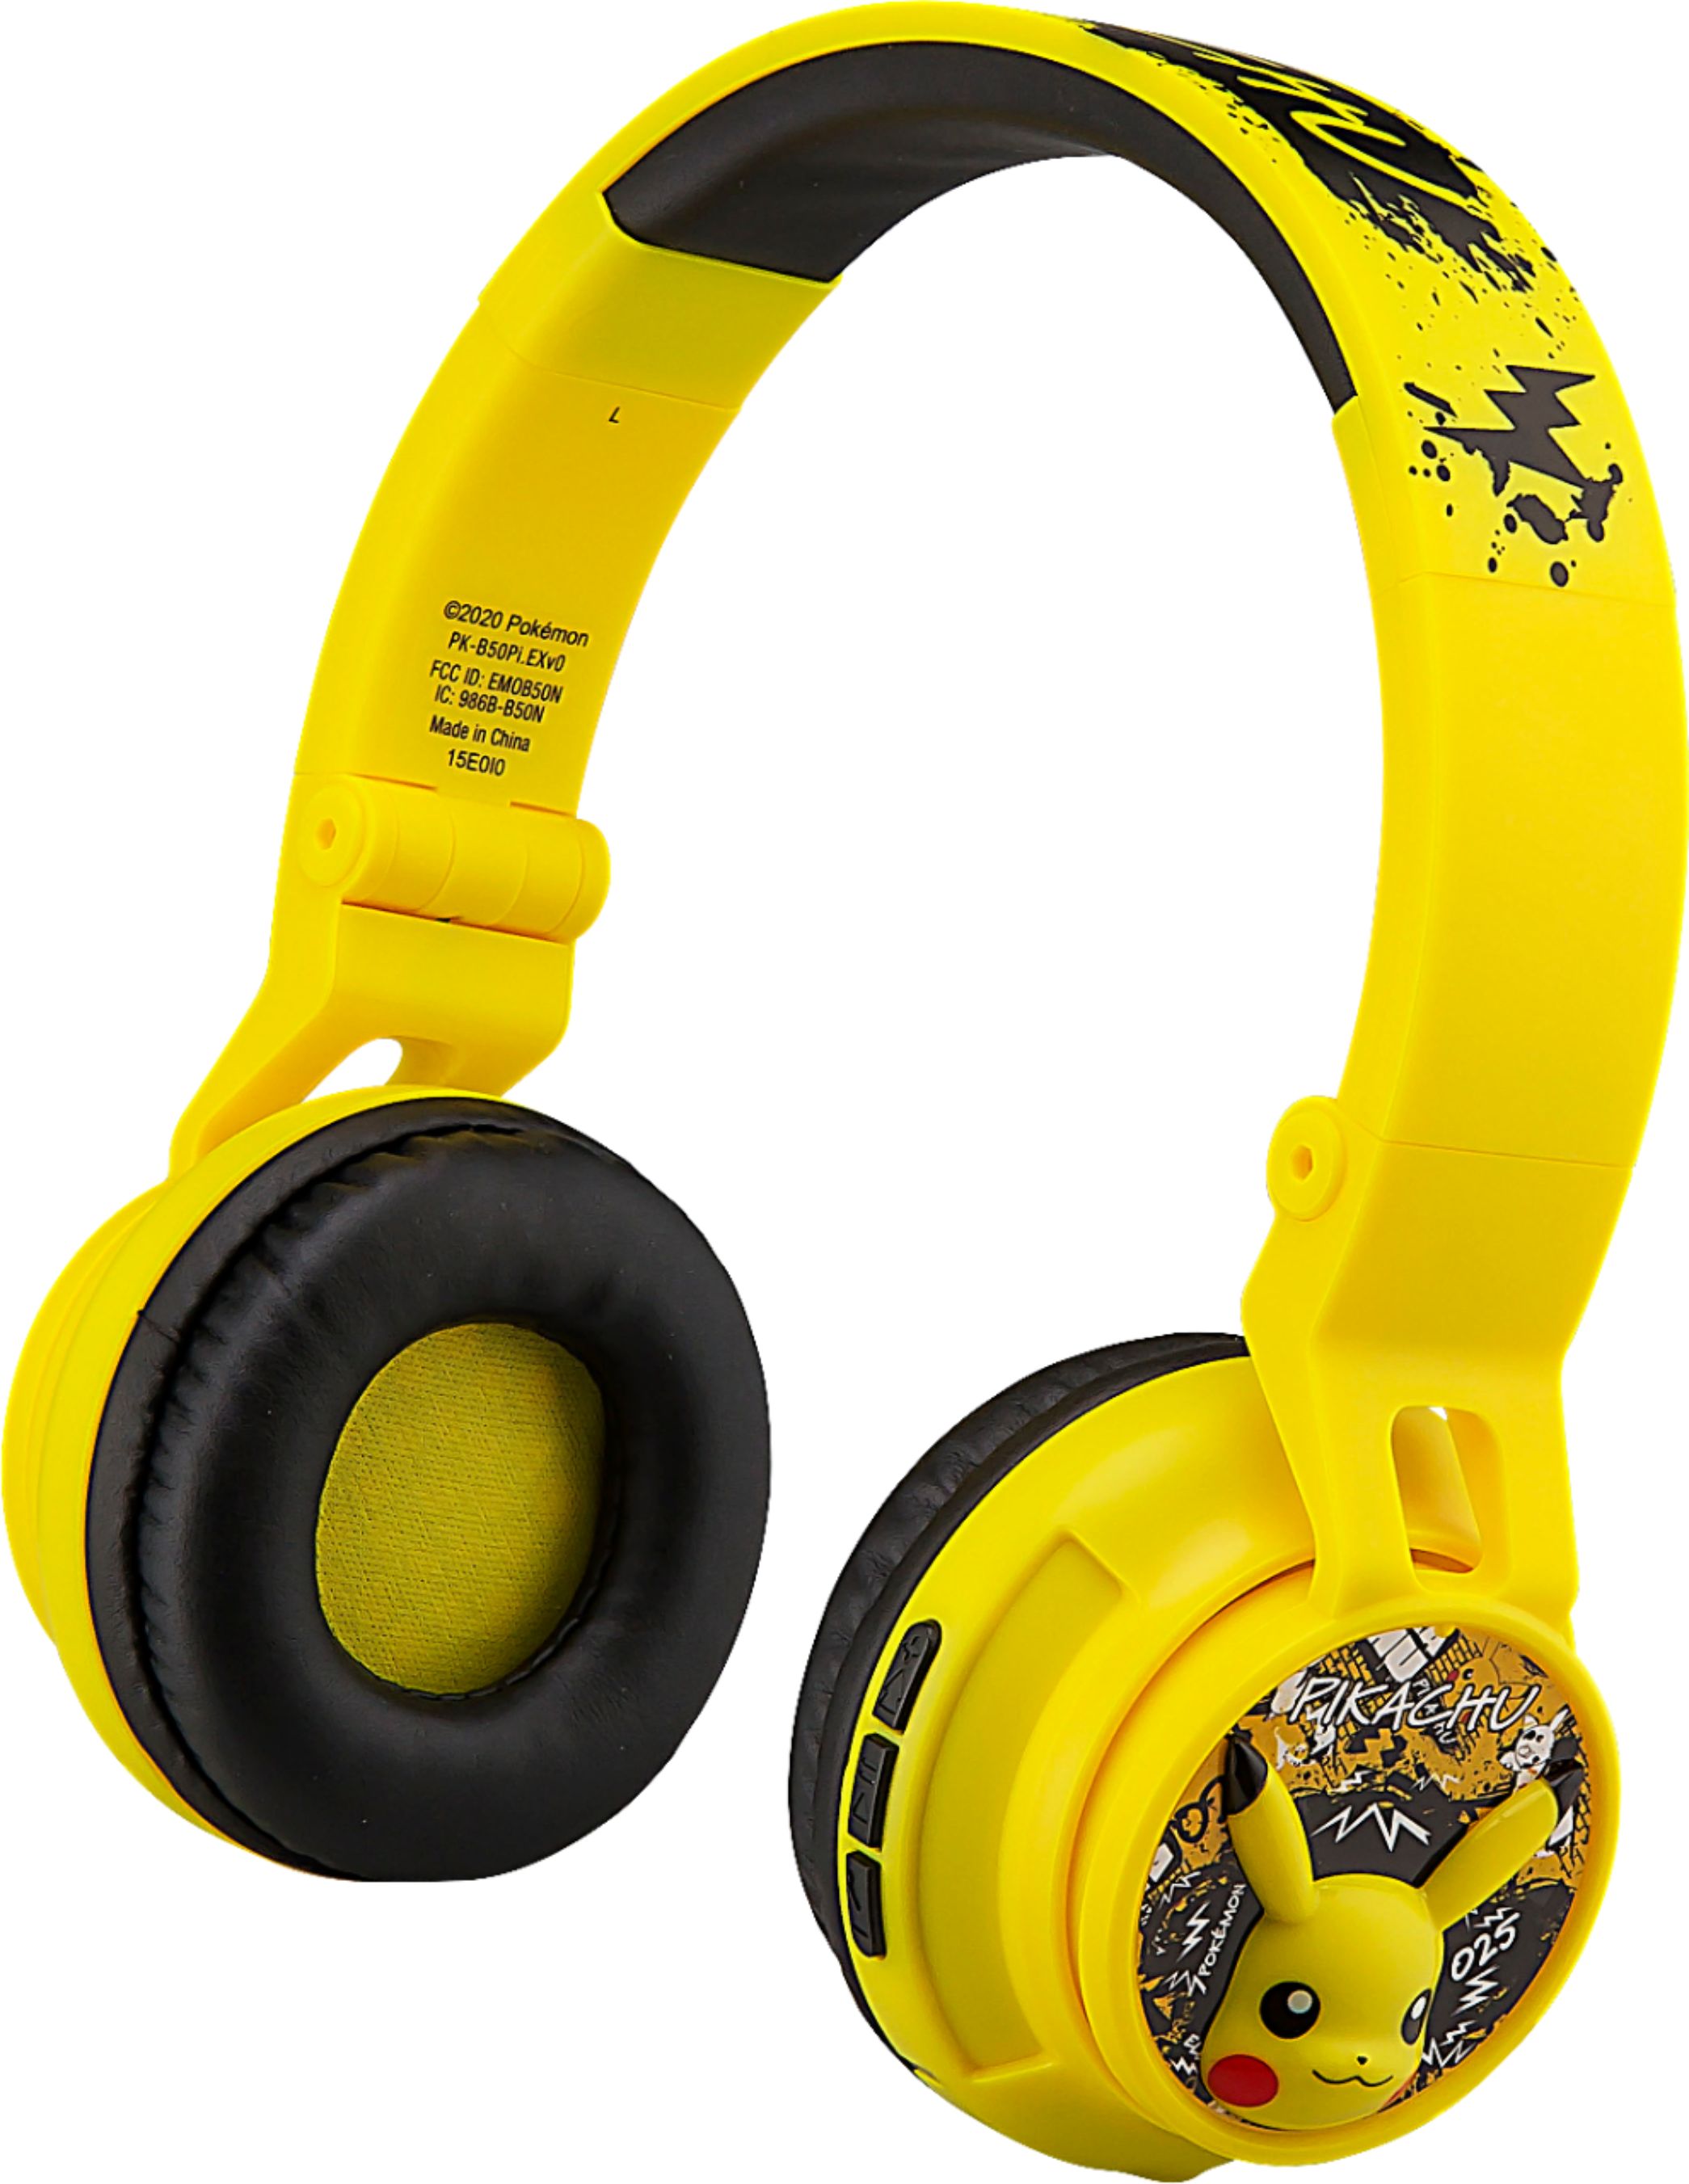 Left View: eKids Pokemon Pikachu Wireless Over the Ear Headphones - yellow